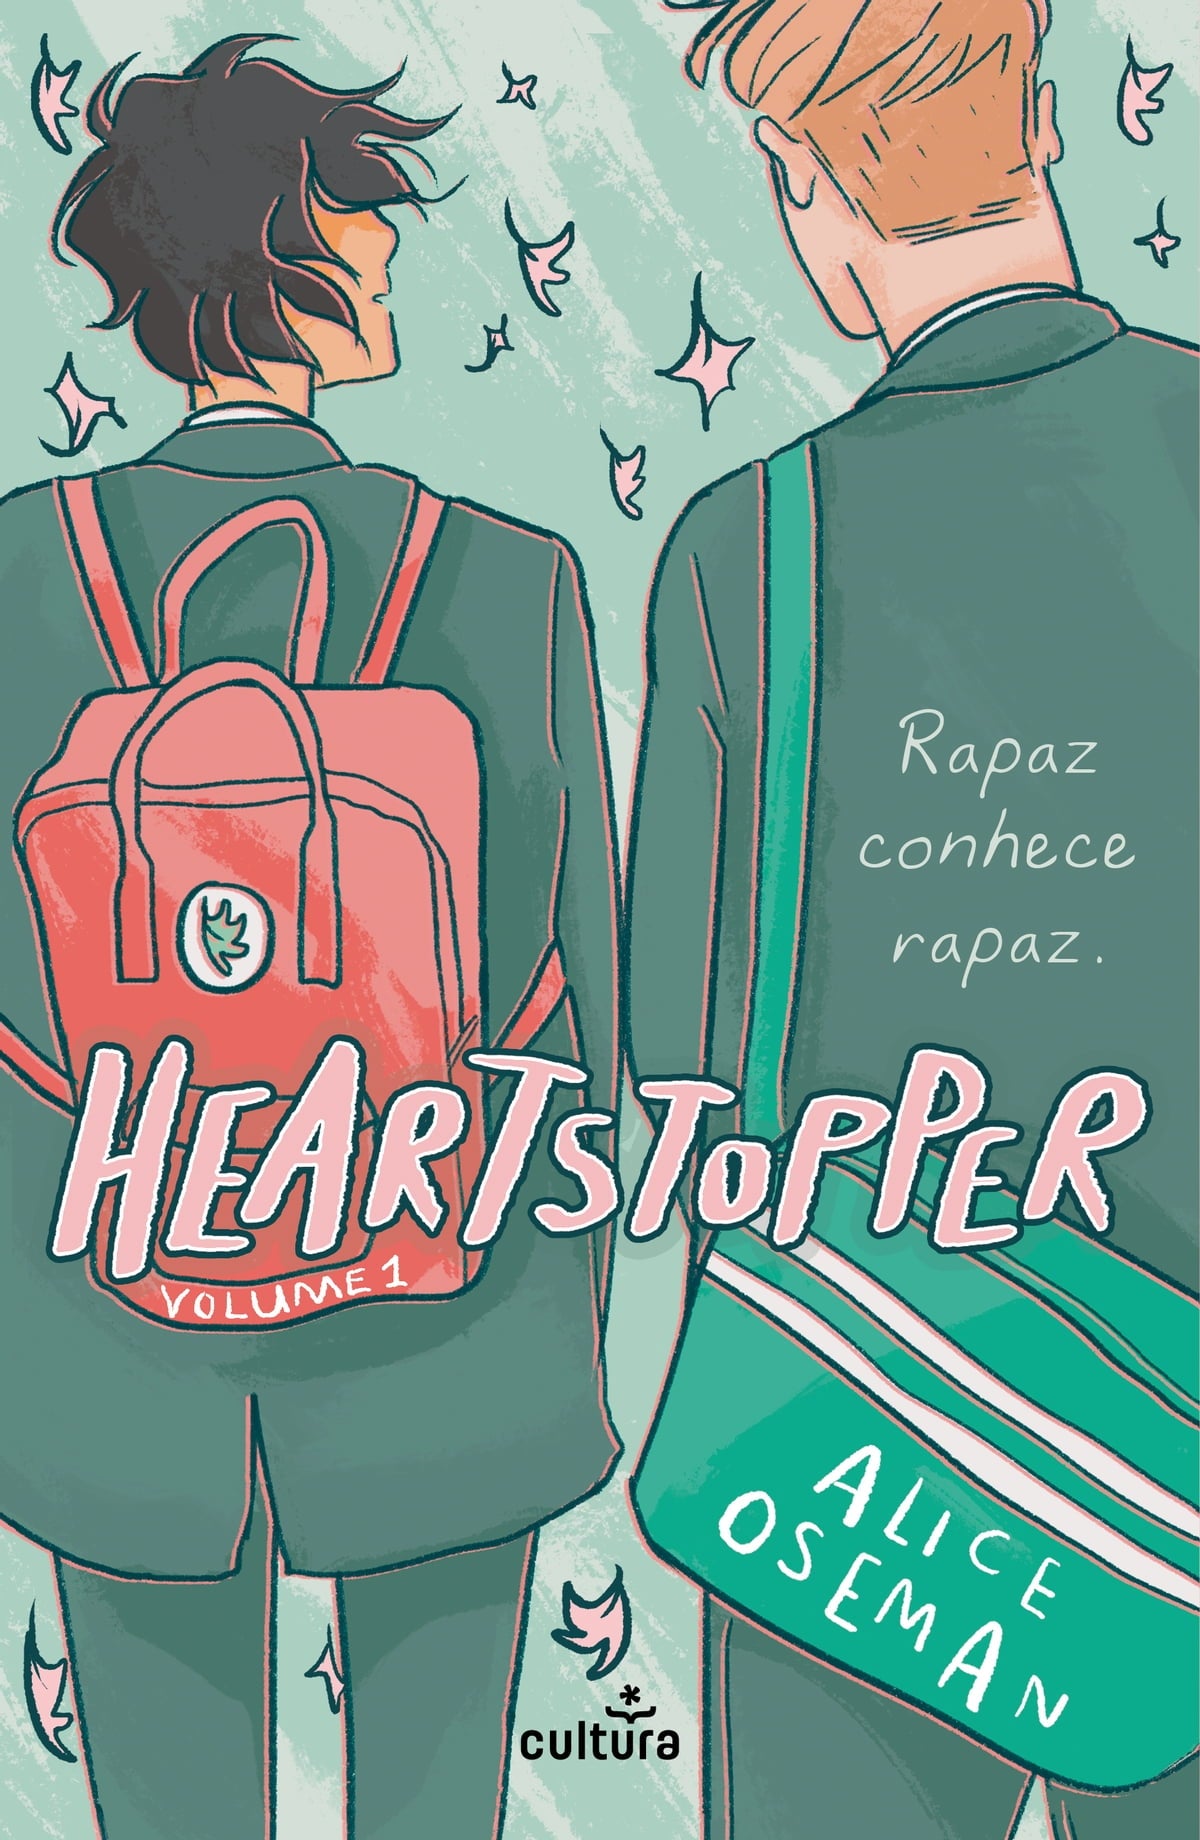 Heartstopper: Volume 1 Rapaz conhecido rapaz de Alice Oseman